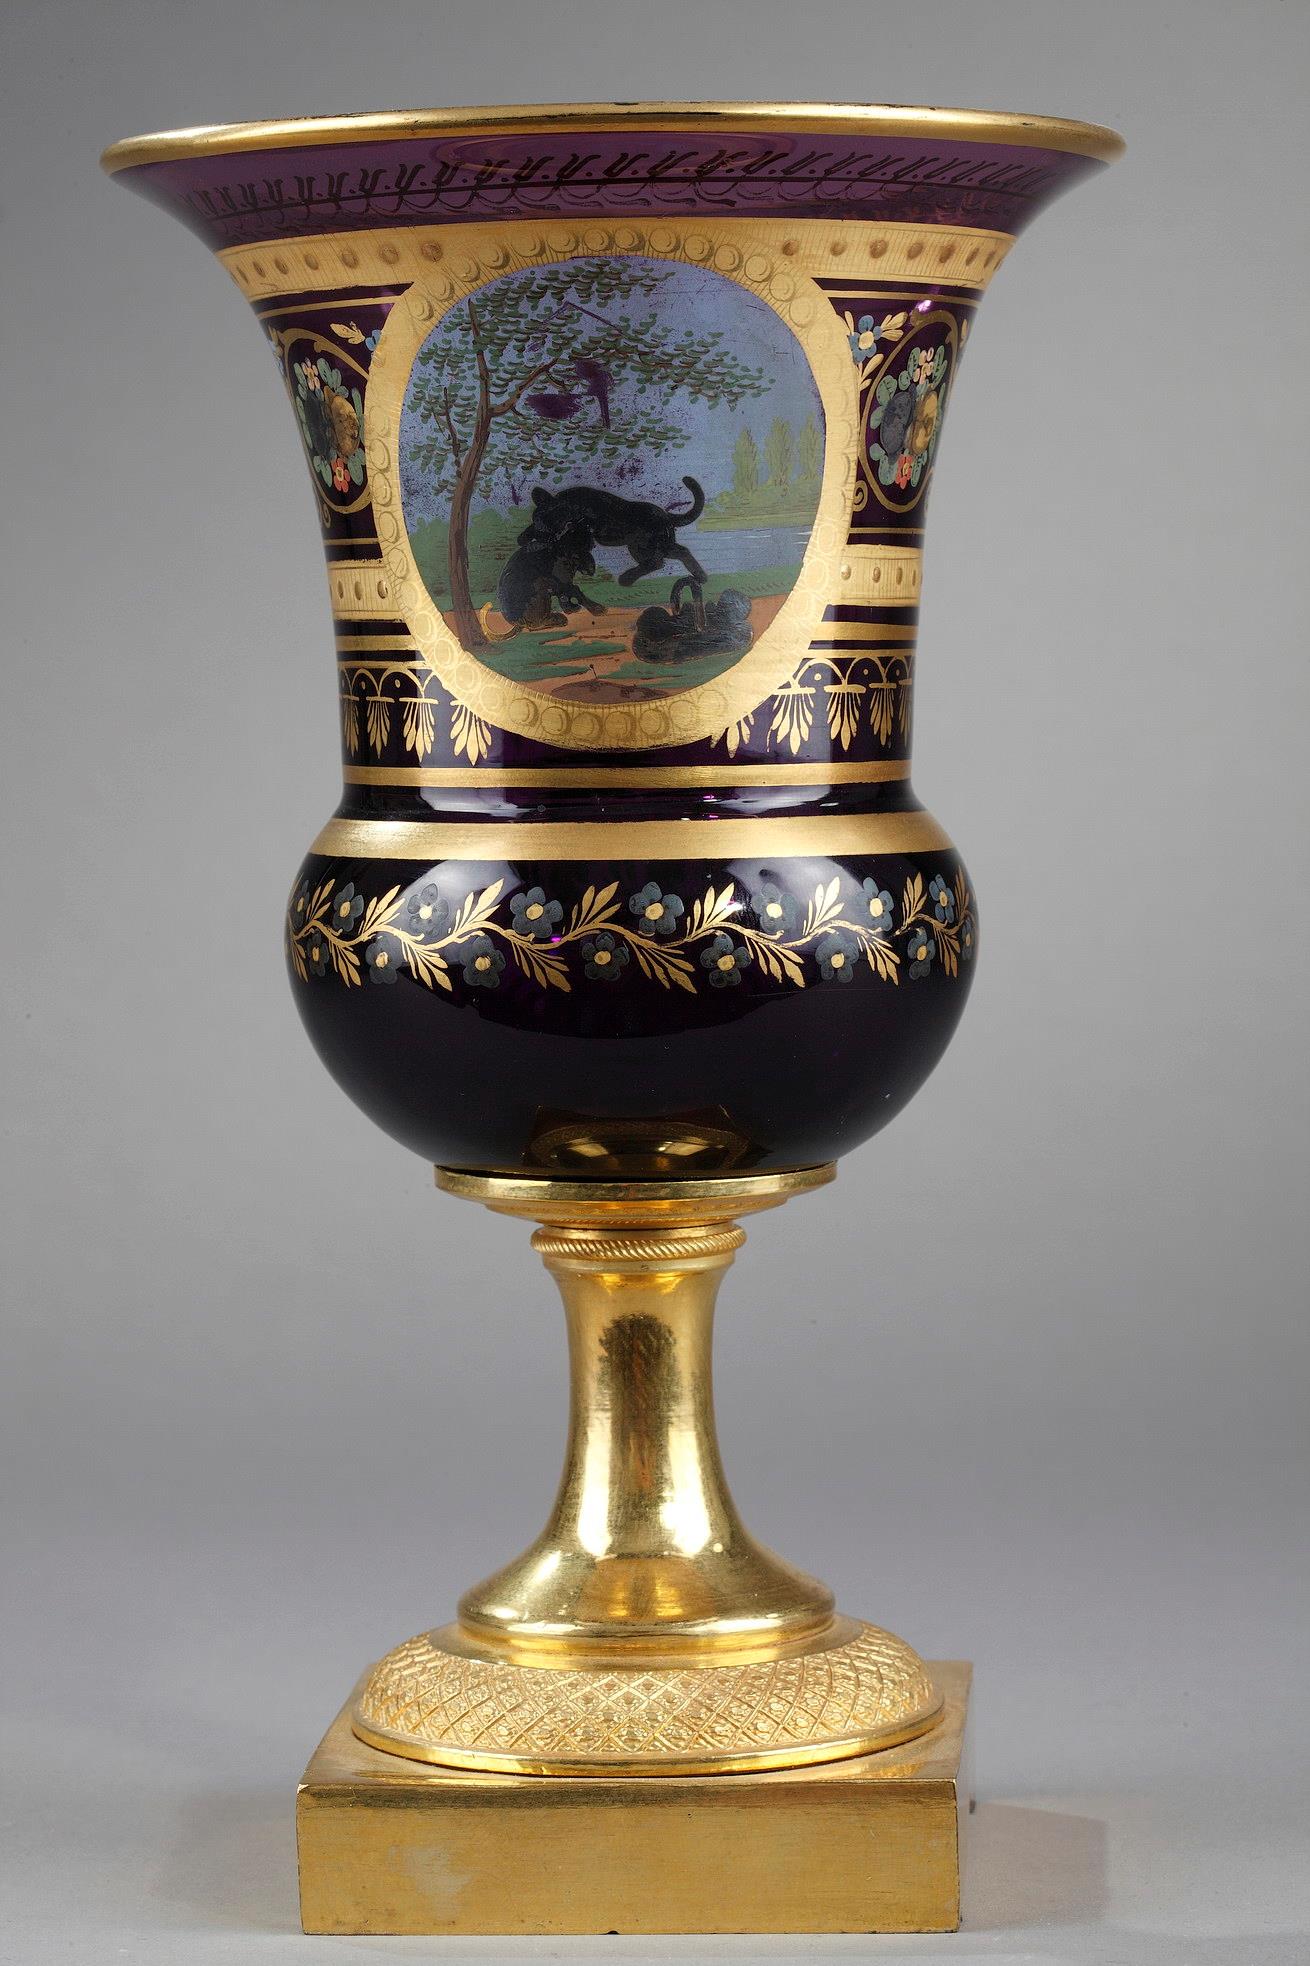 Opaline Medicis vase ormolu mounts inspired by La Fontaine' fables. 
Circa 1820-1830